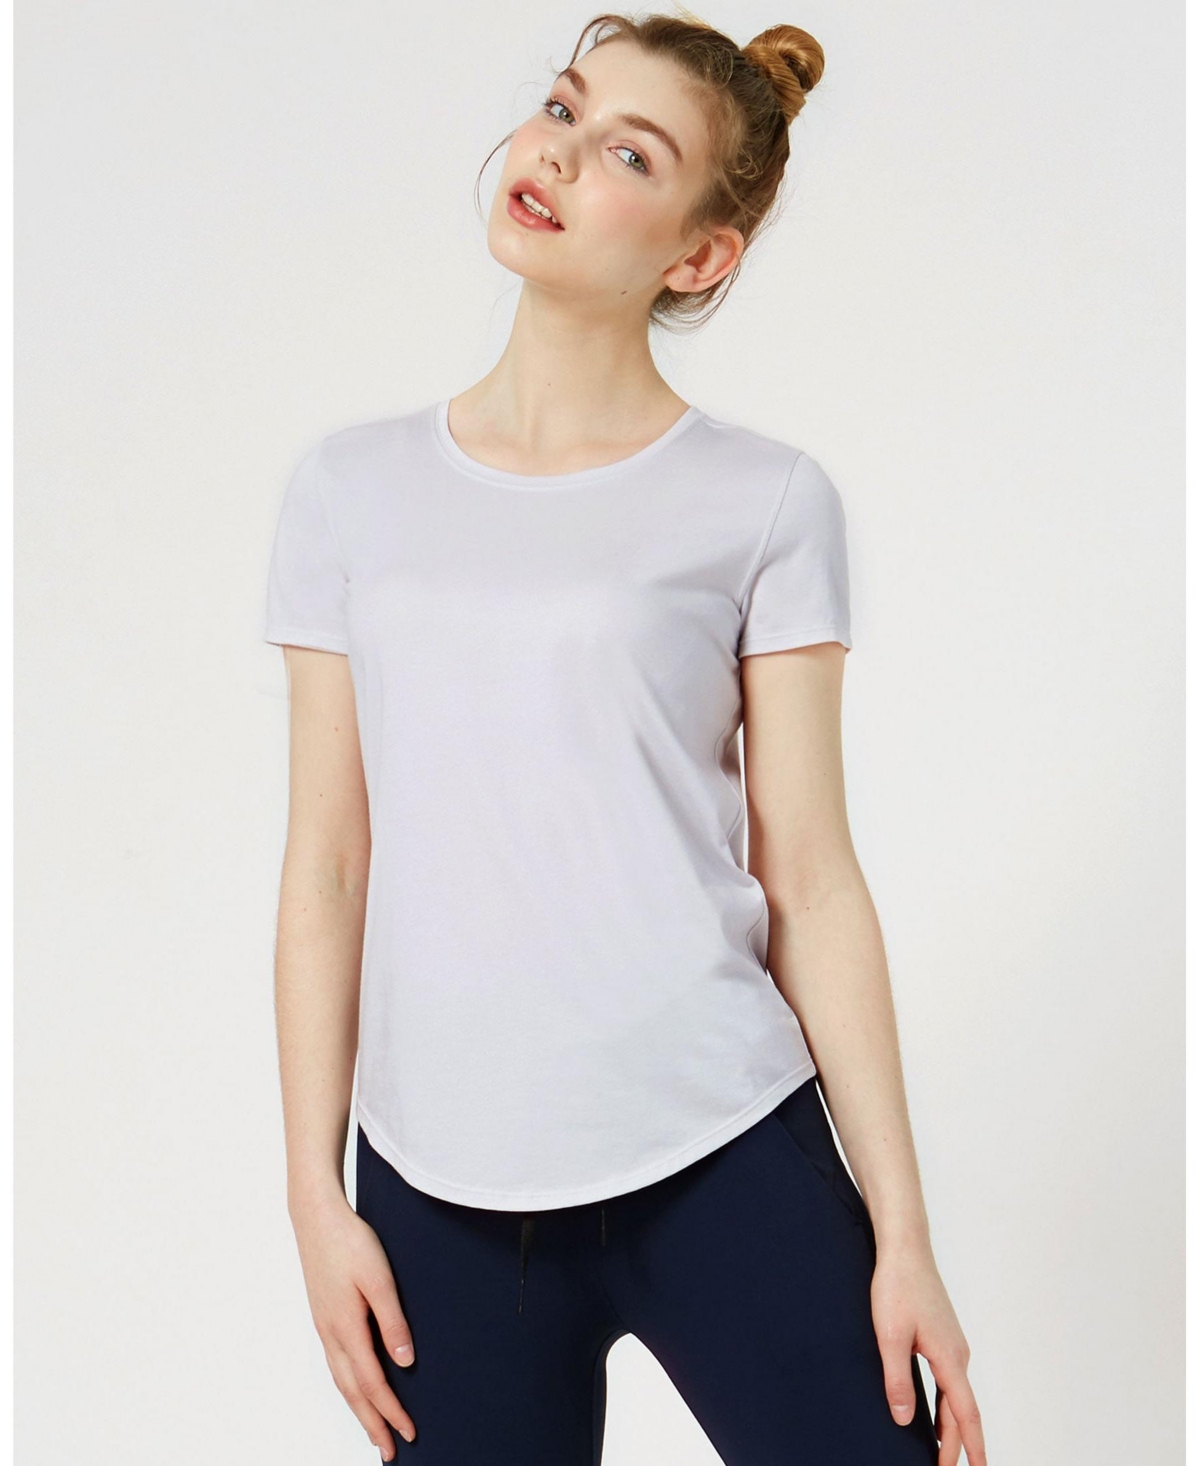 Rebody Essentials Scooped Short Sleeve Top For Women - Ice grey